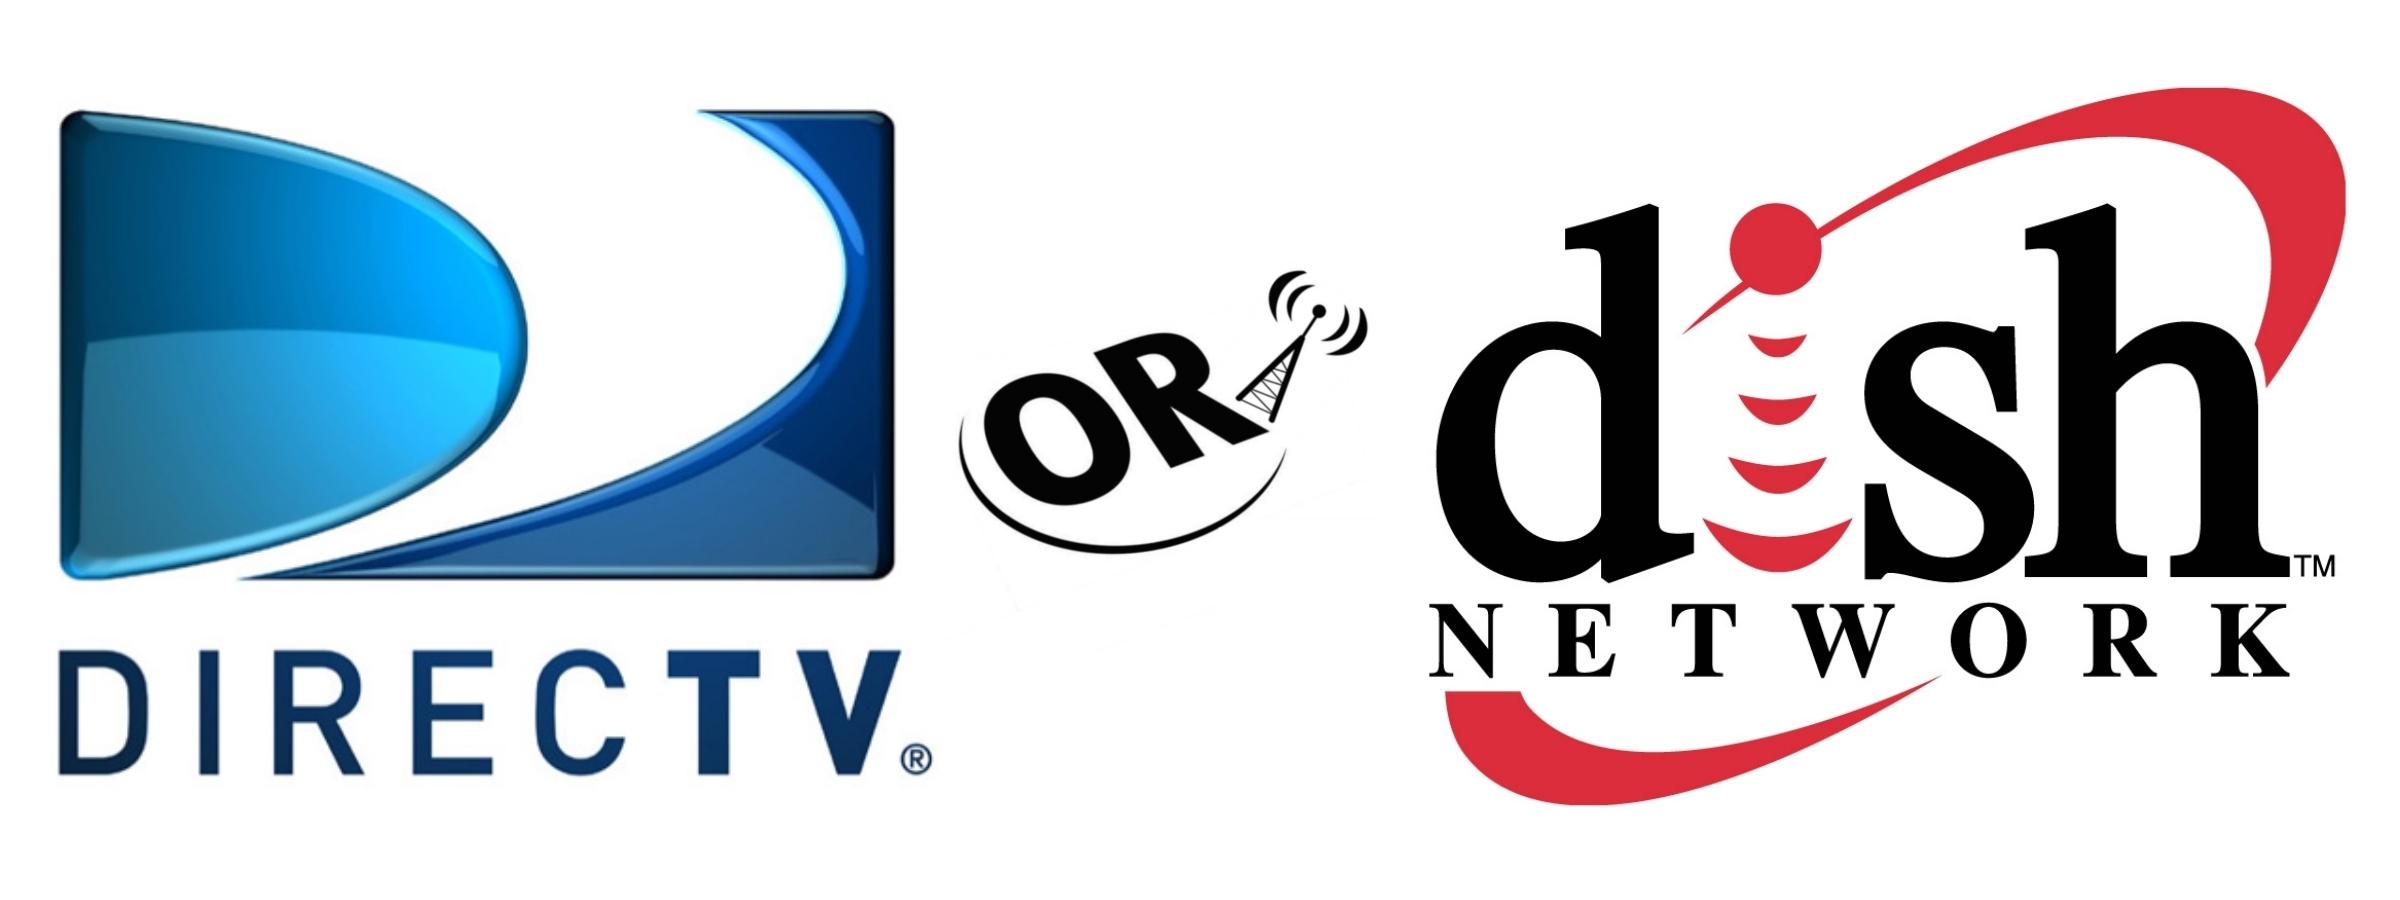 Dish Network Logo - Dish network Logos